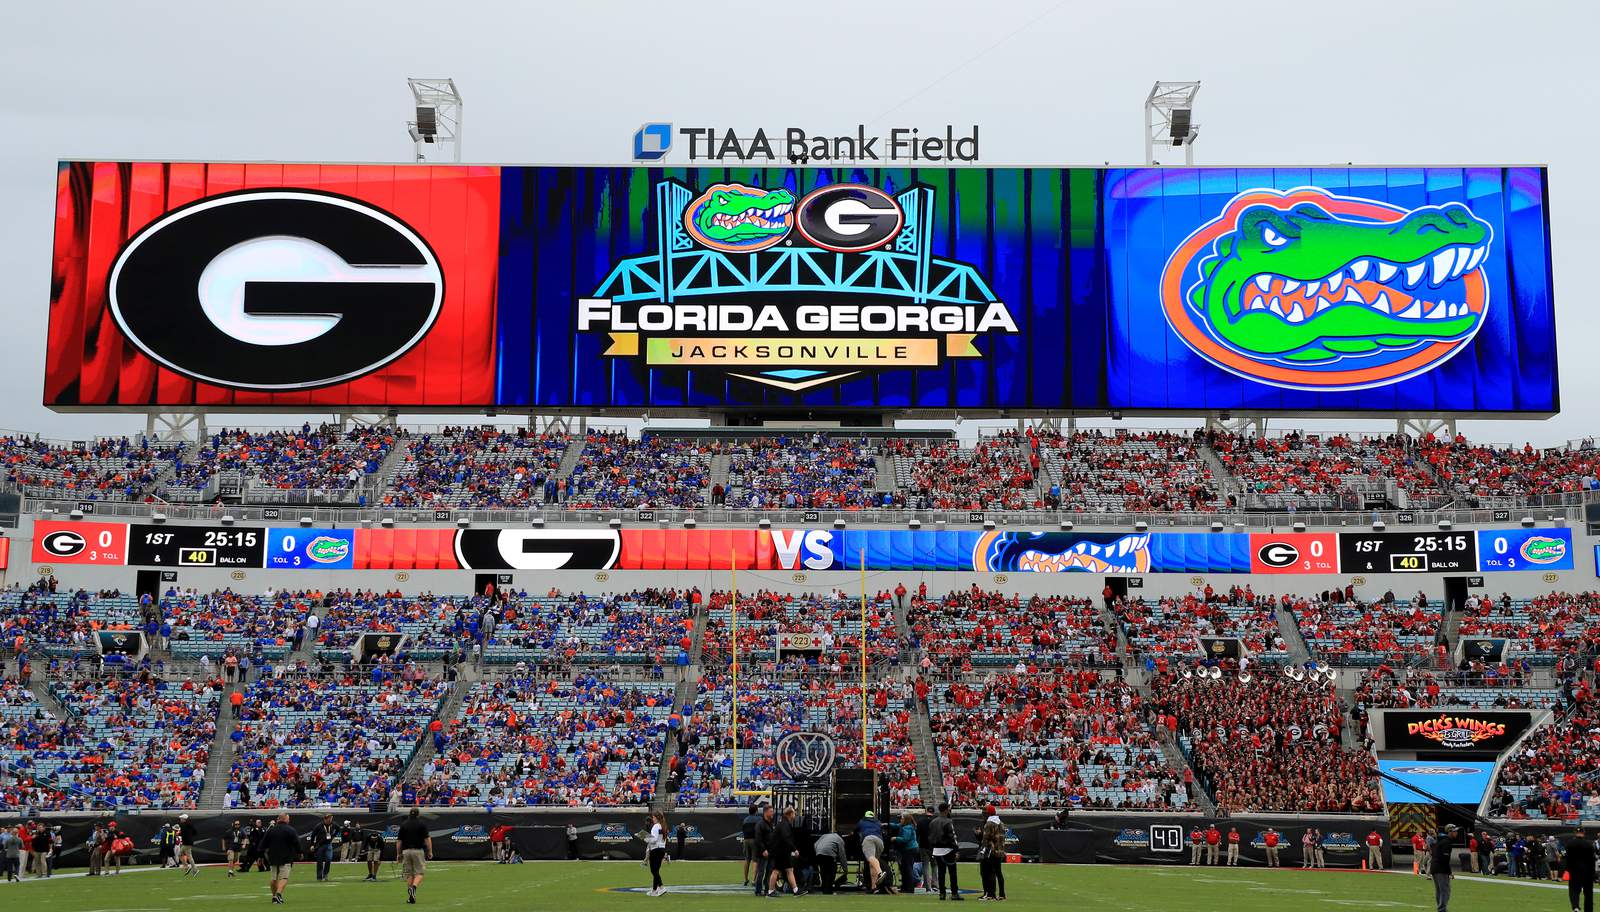 Gators Breakdown: Florida in familiar situation heading into game vs Georgia